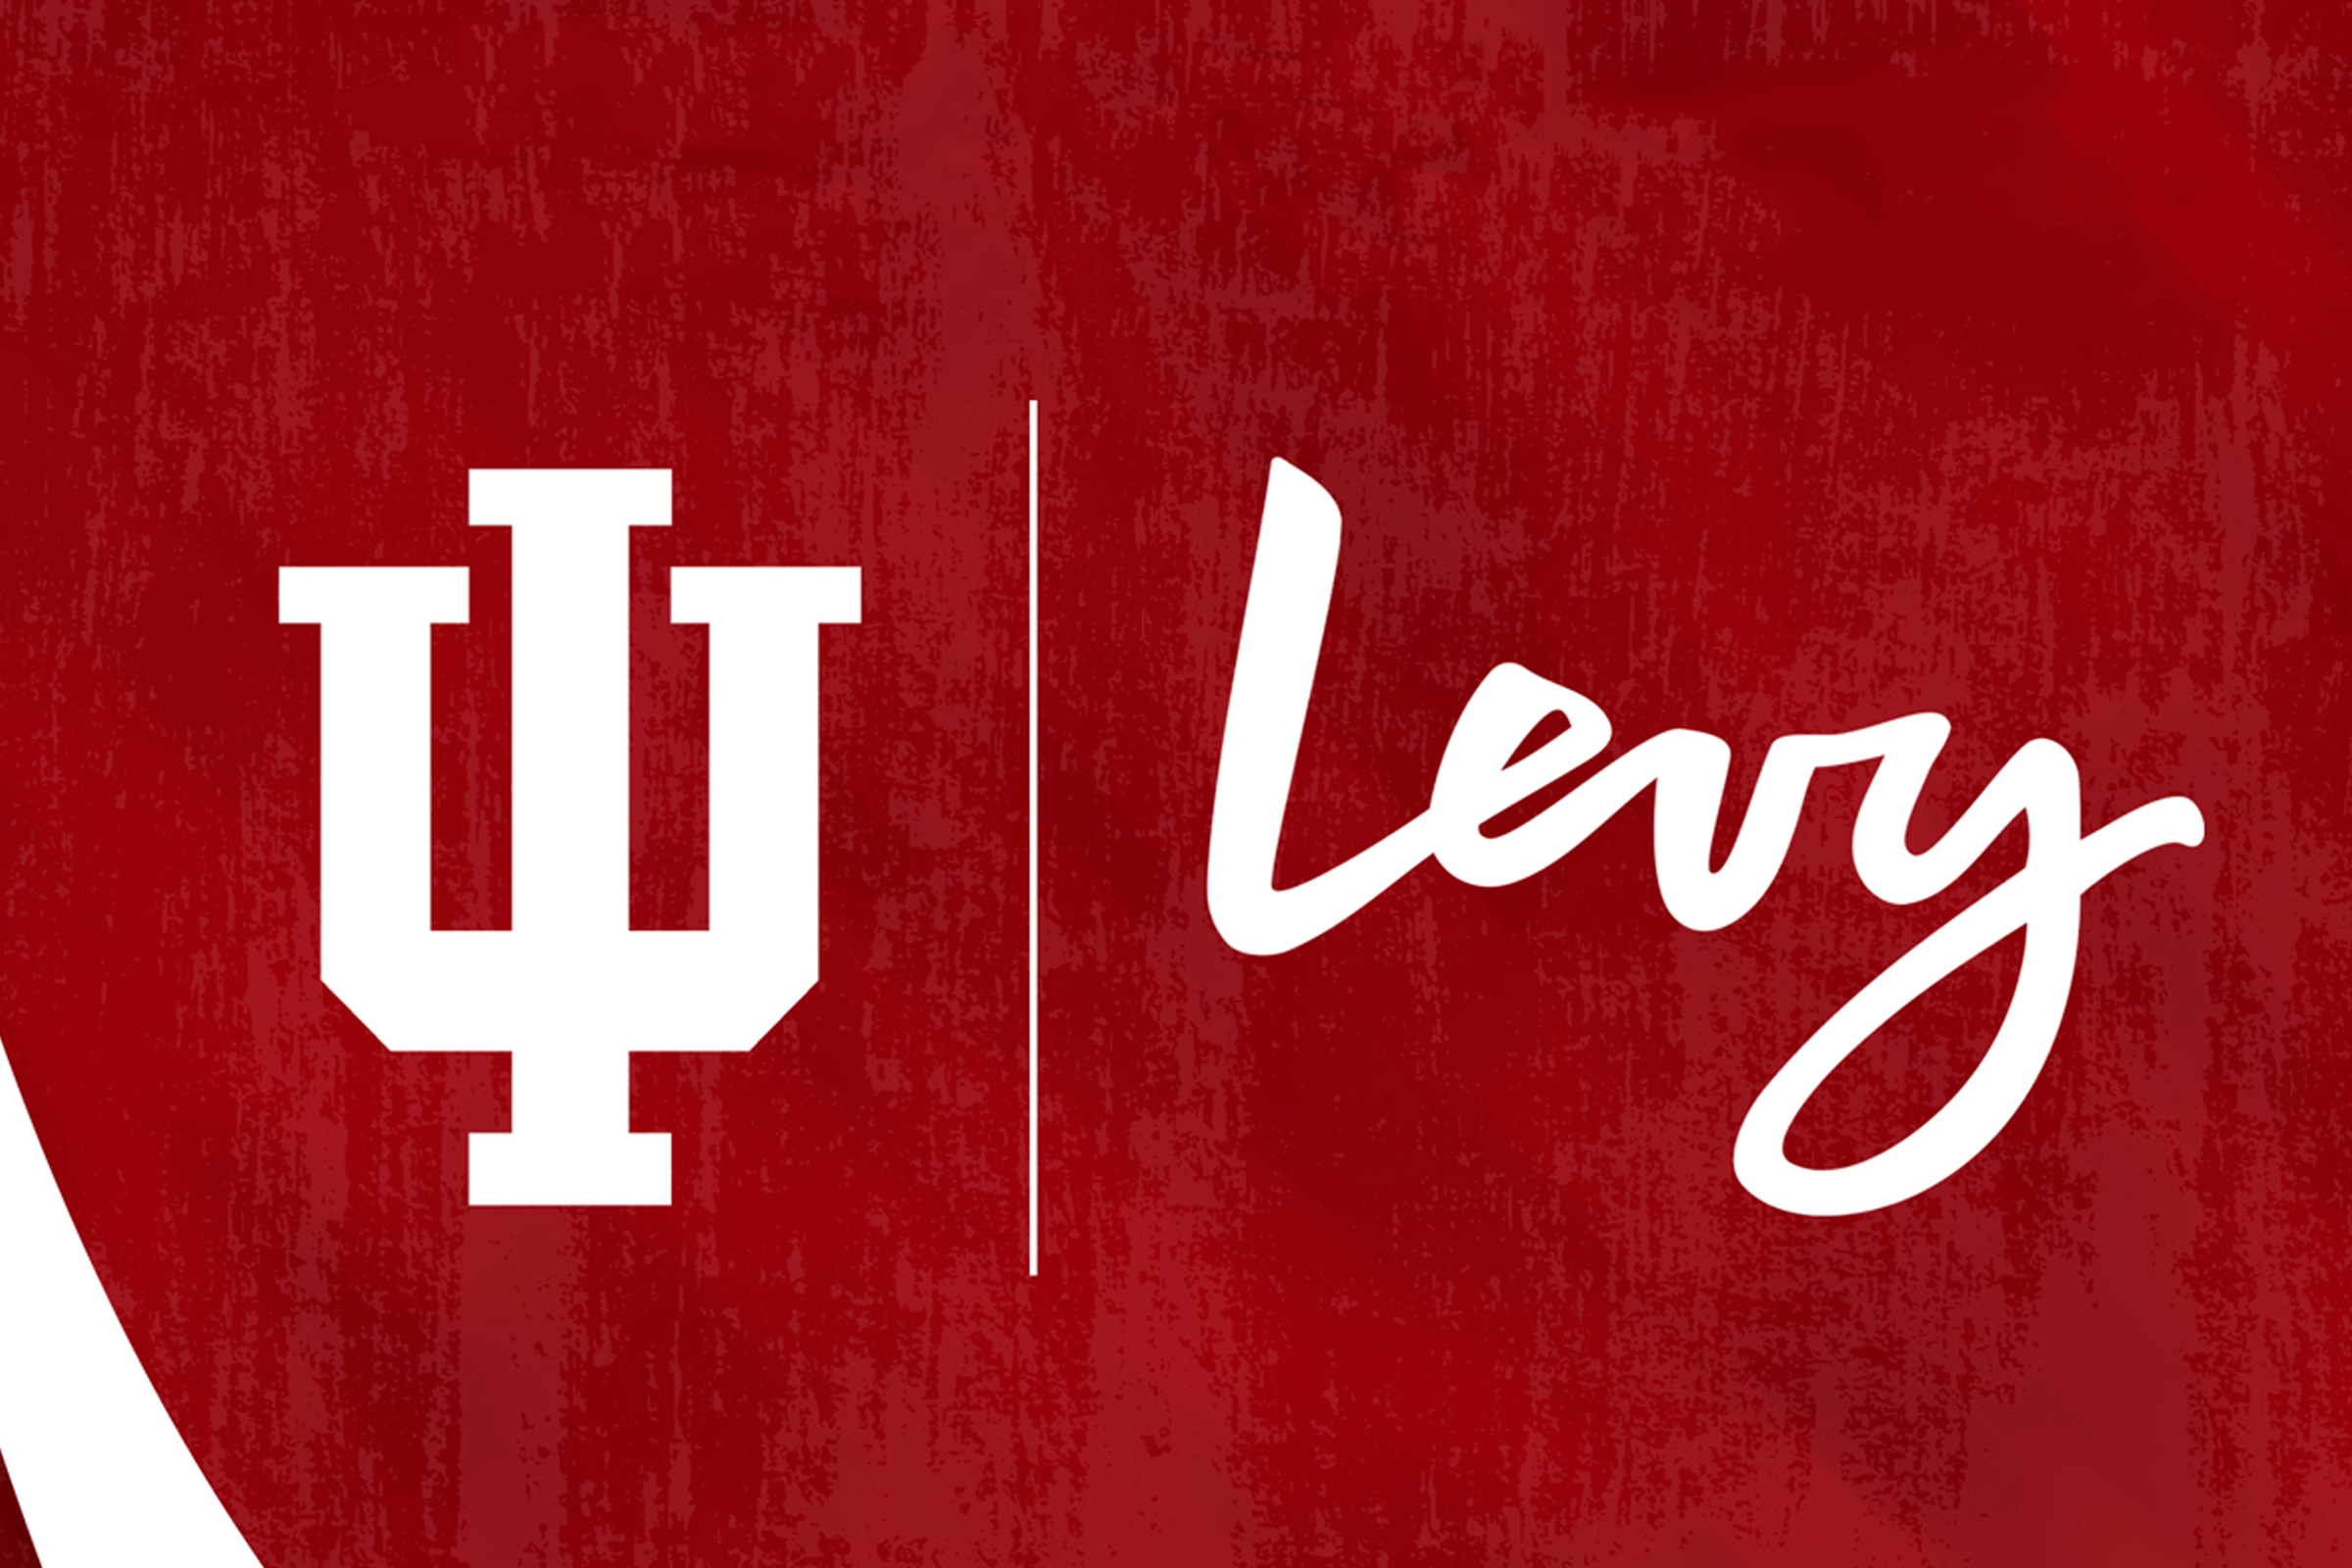 Levy logo next to Indiana logo